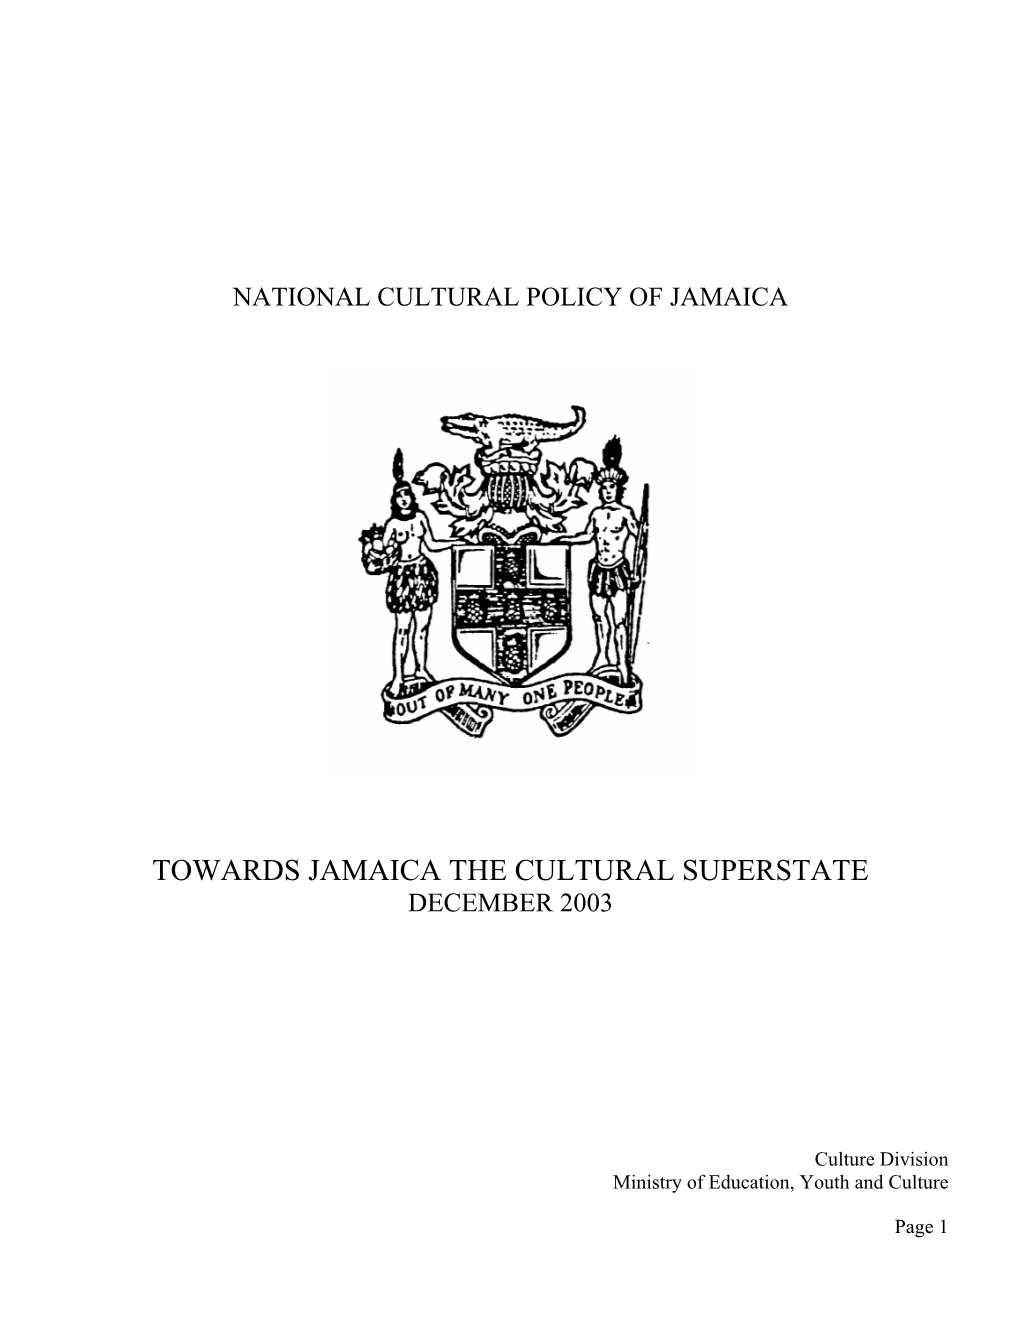 Towards Jamaica the Cultural Superstate December 2003